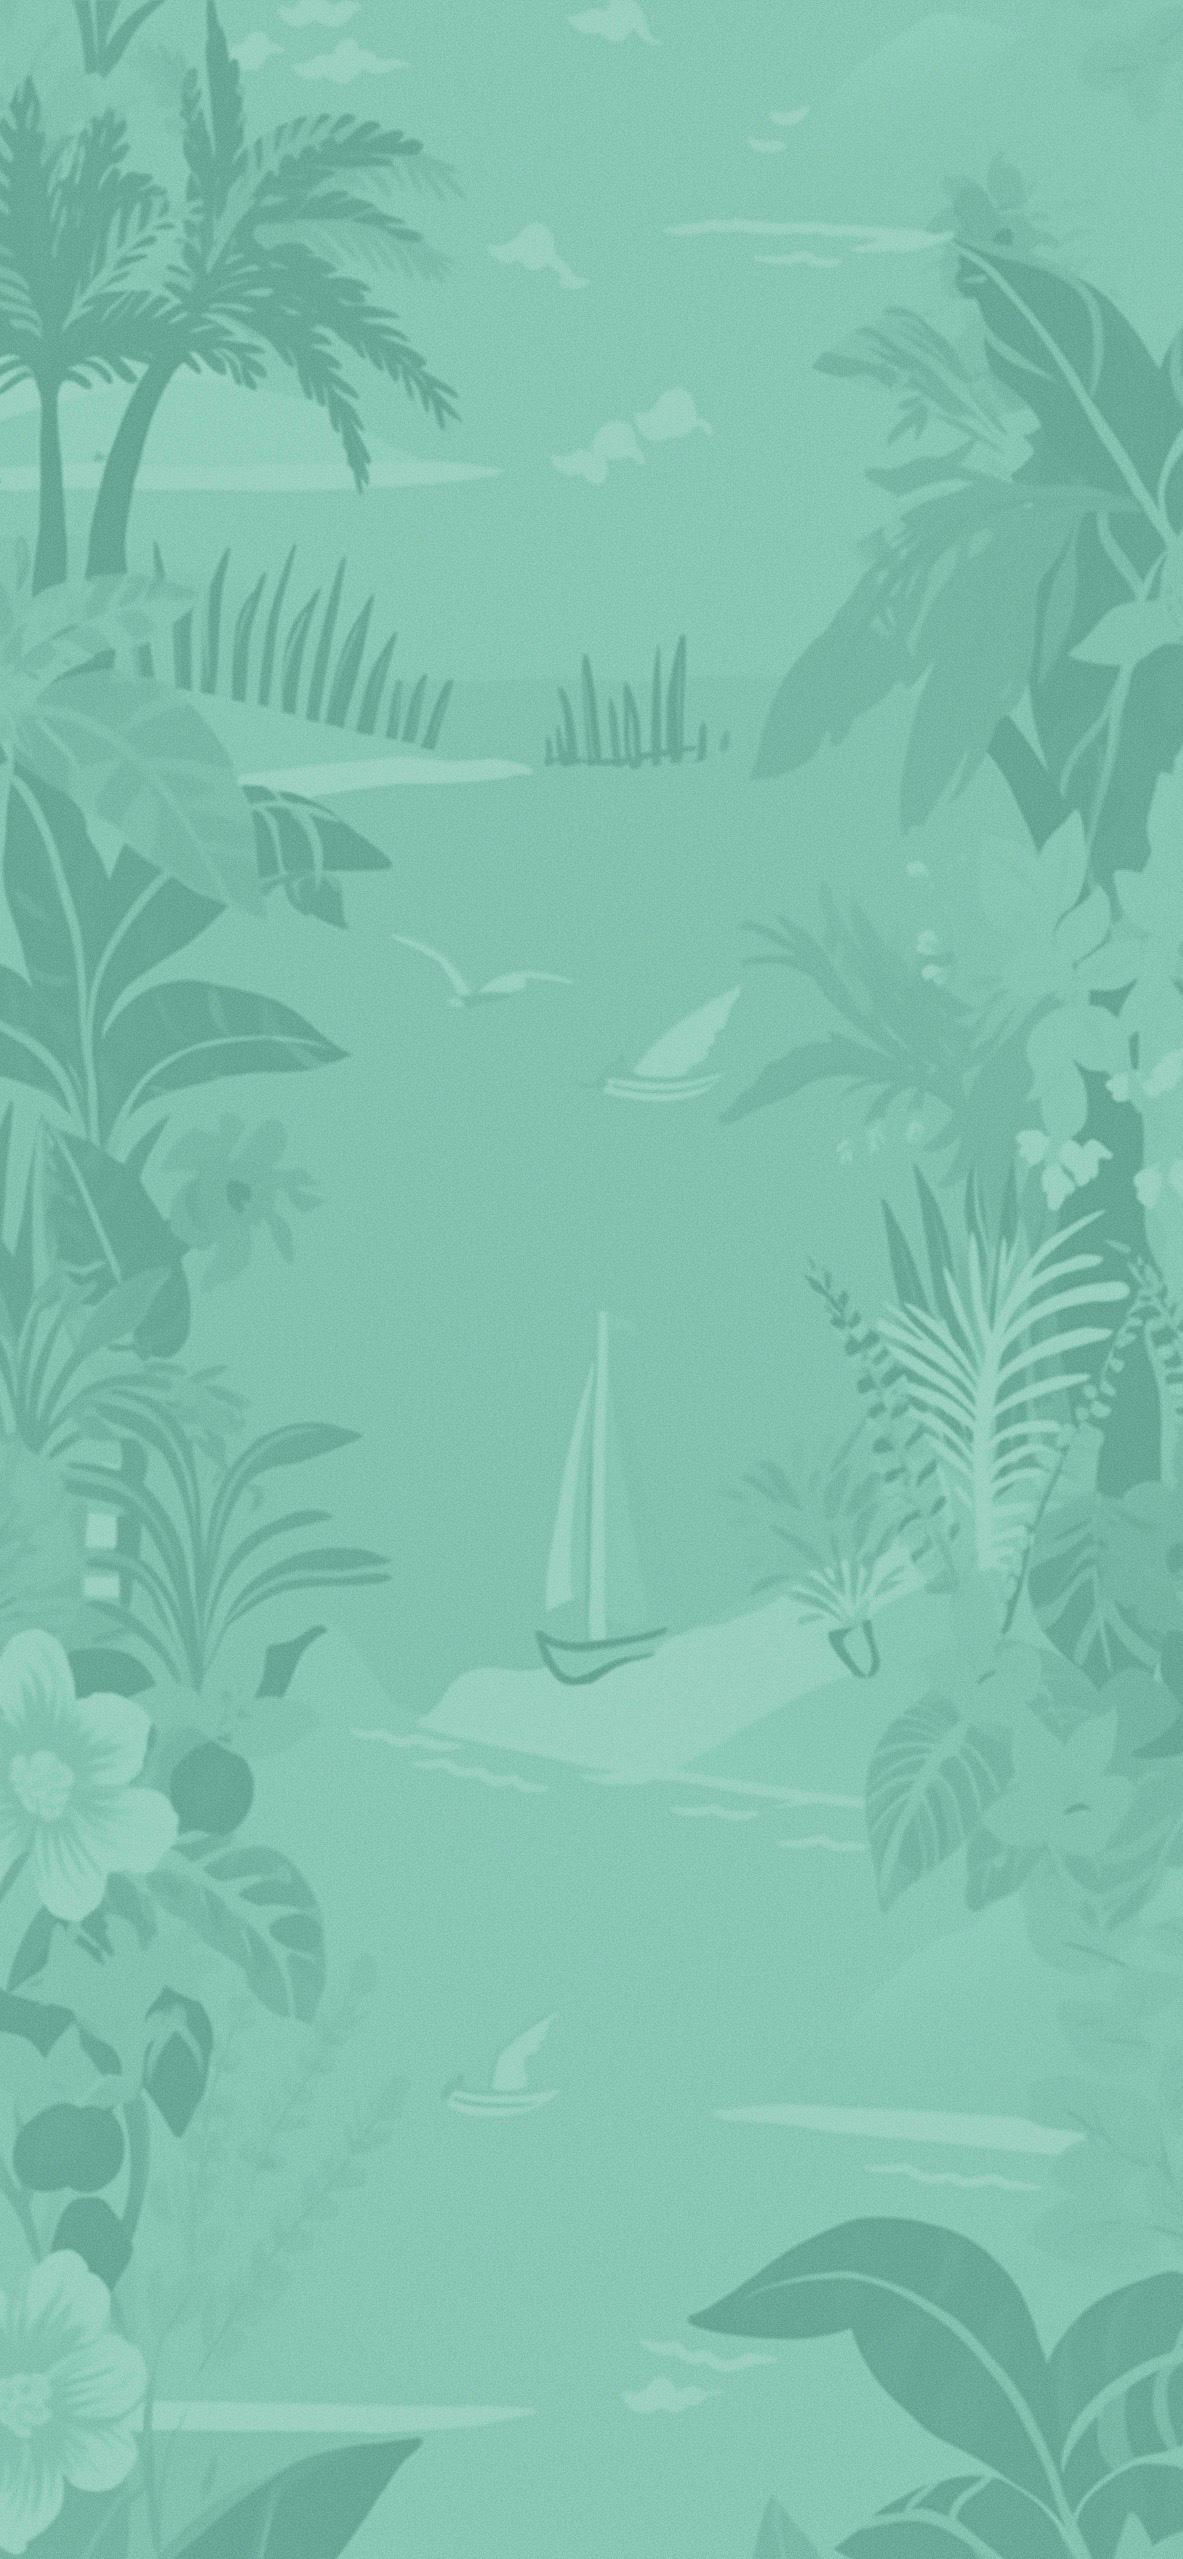 Preppy Sea Aesthetic Wallpaper Summer 4k